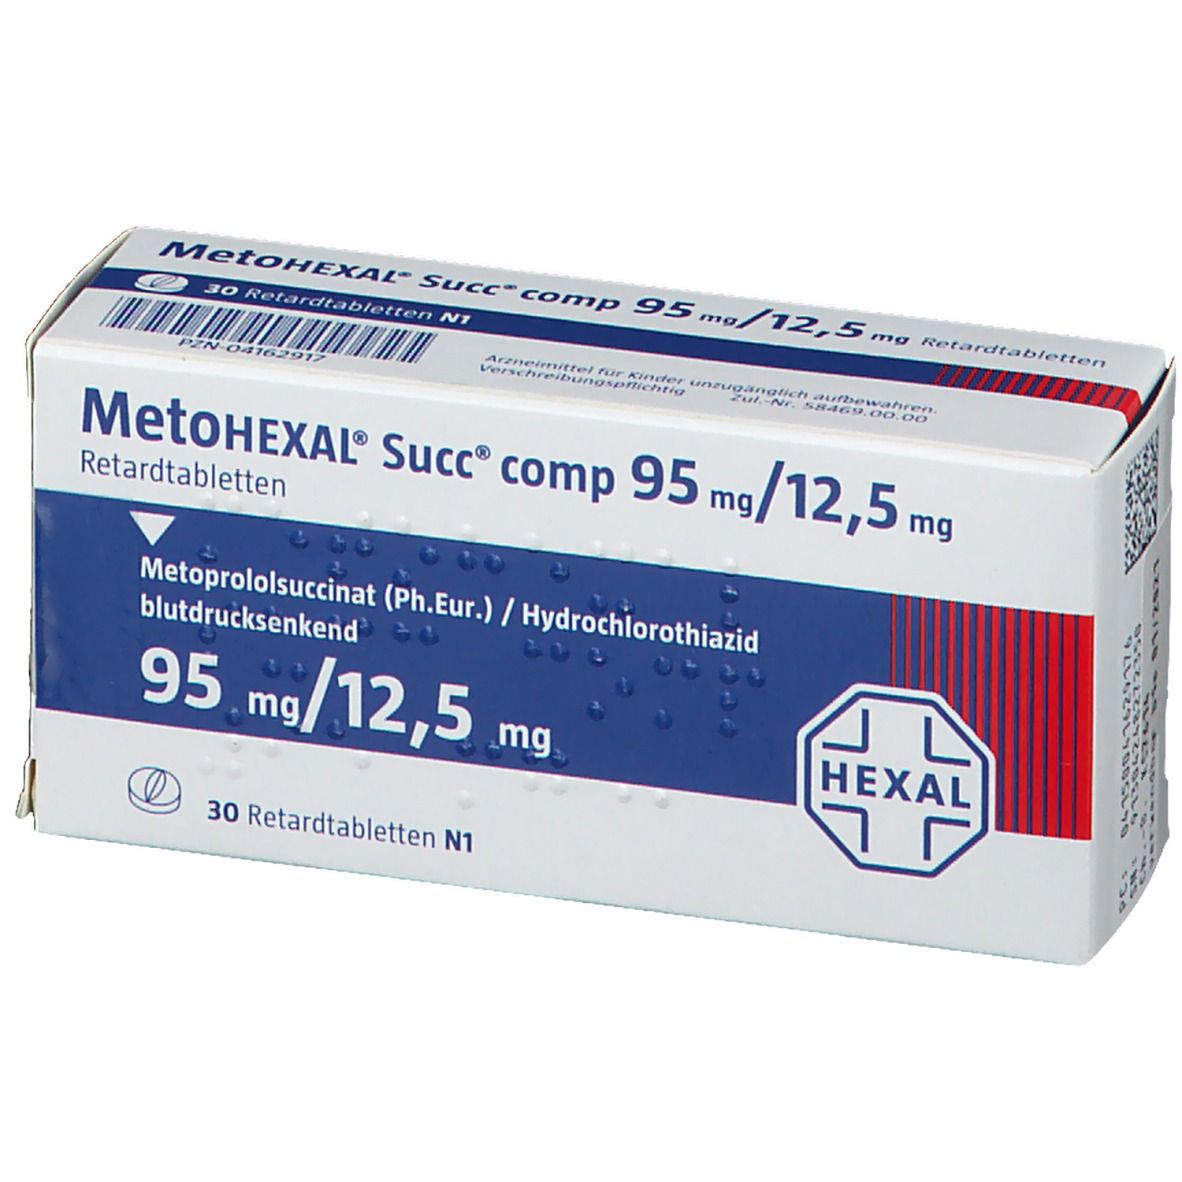 MetoHEXAL® Succ® comp 95 mg/12,5 mg